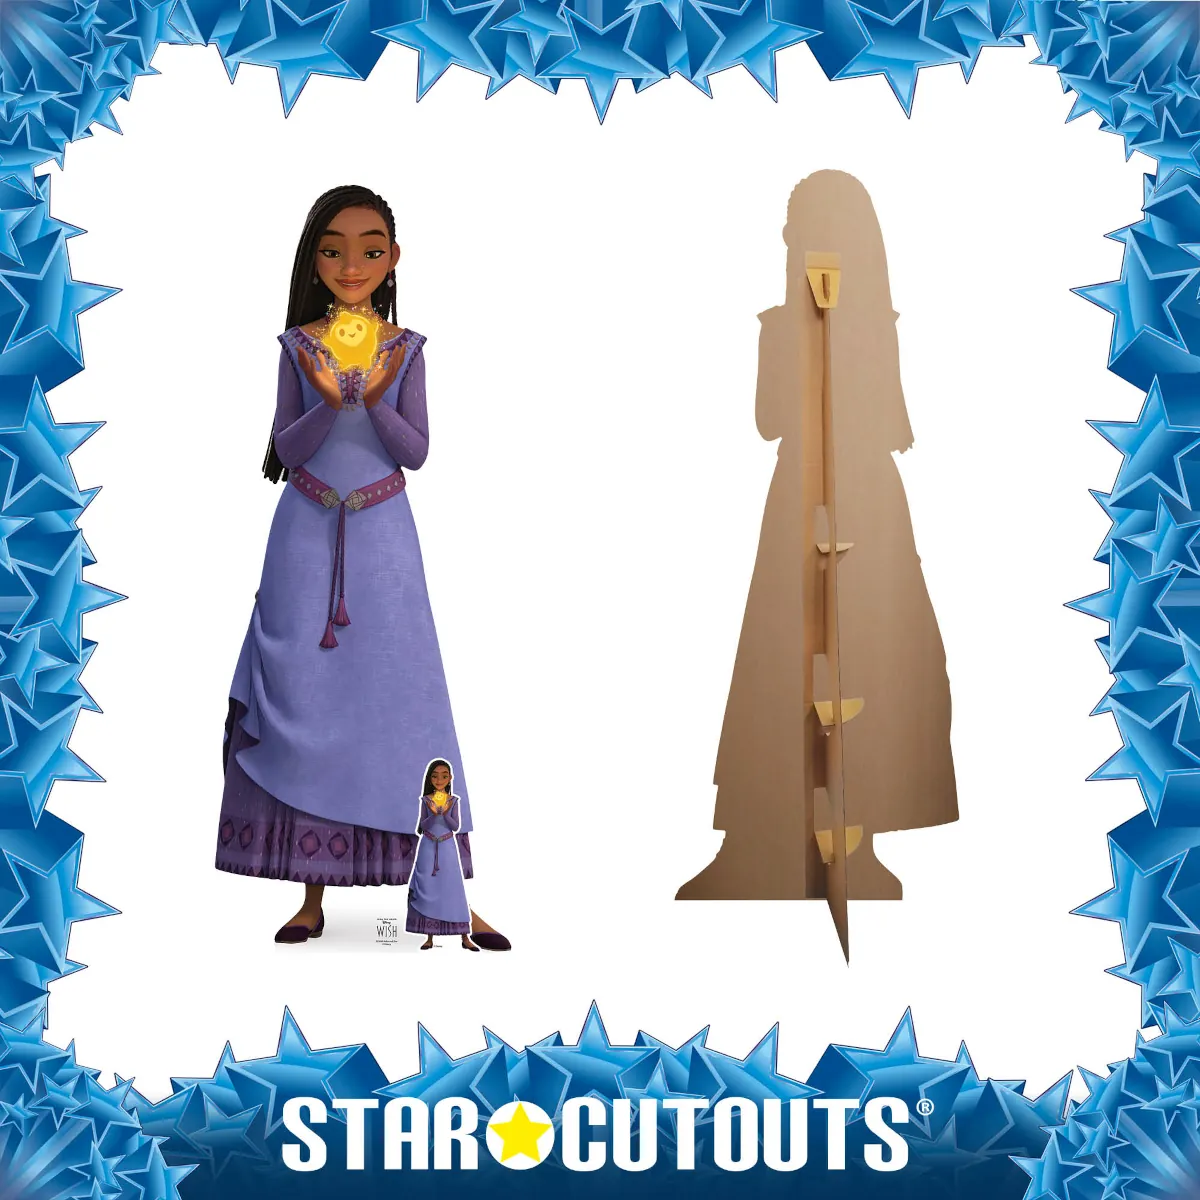 SC4360 Asha with Wishing Star (Disney Wish) Official Lifesize + Mini Cardboard Cutout Standee Frame